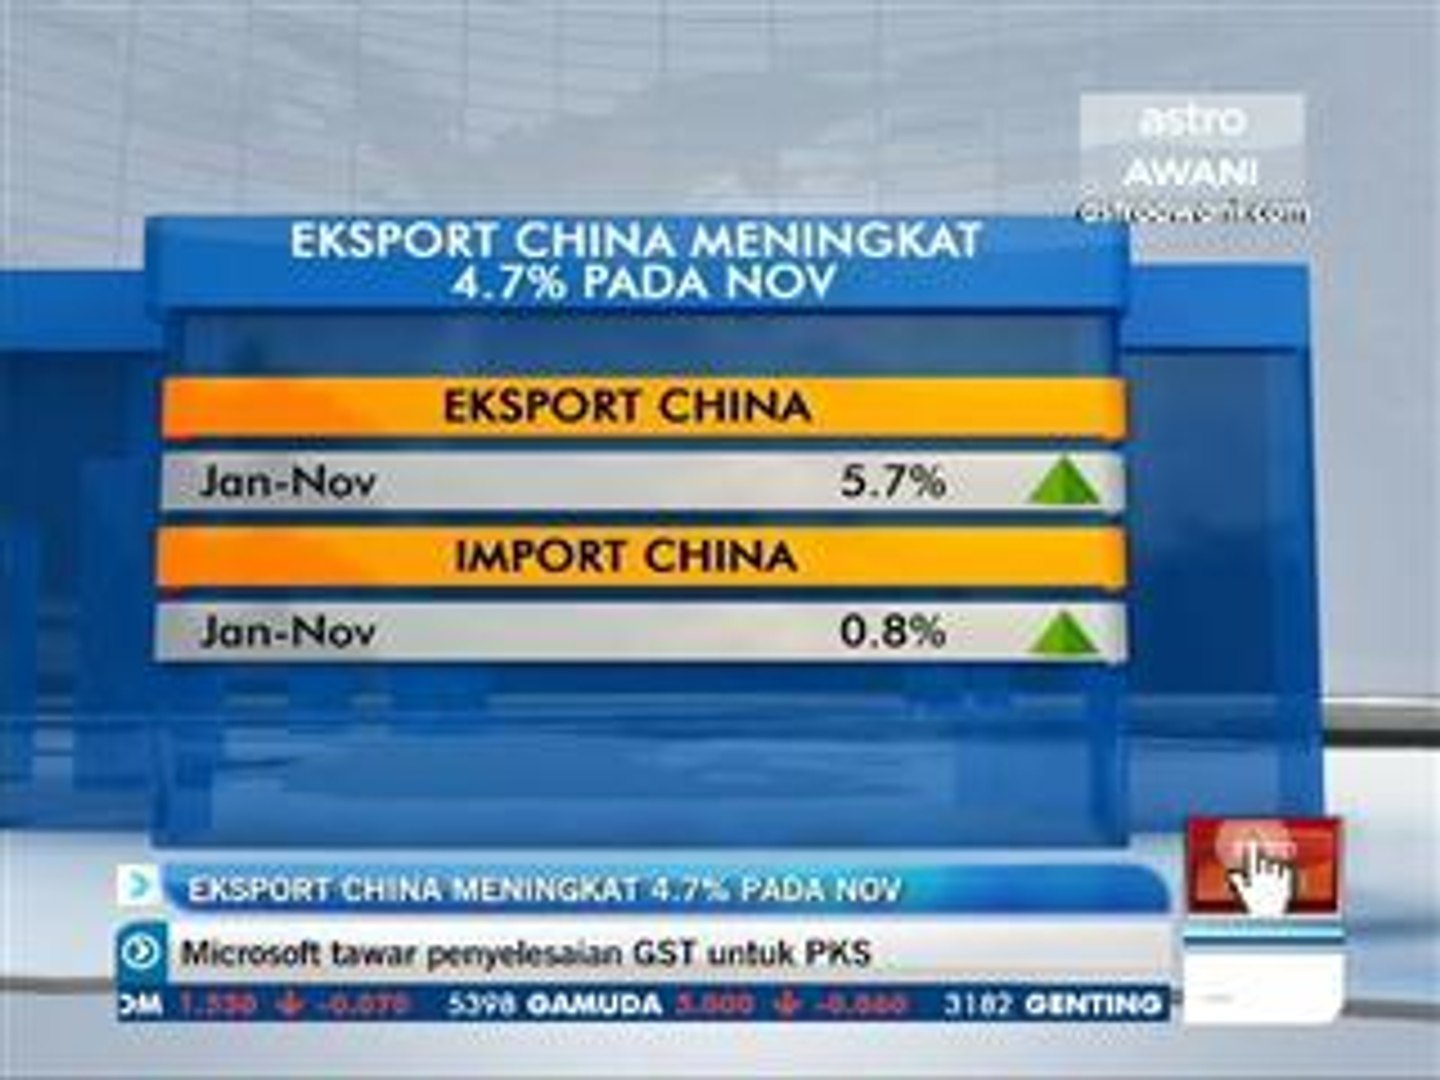 ⁣Eksport China meningkat 4.7% pada Nov